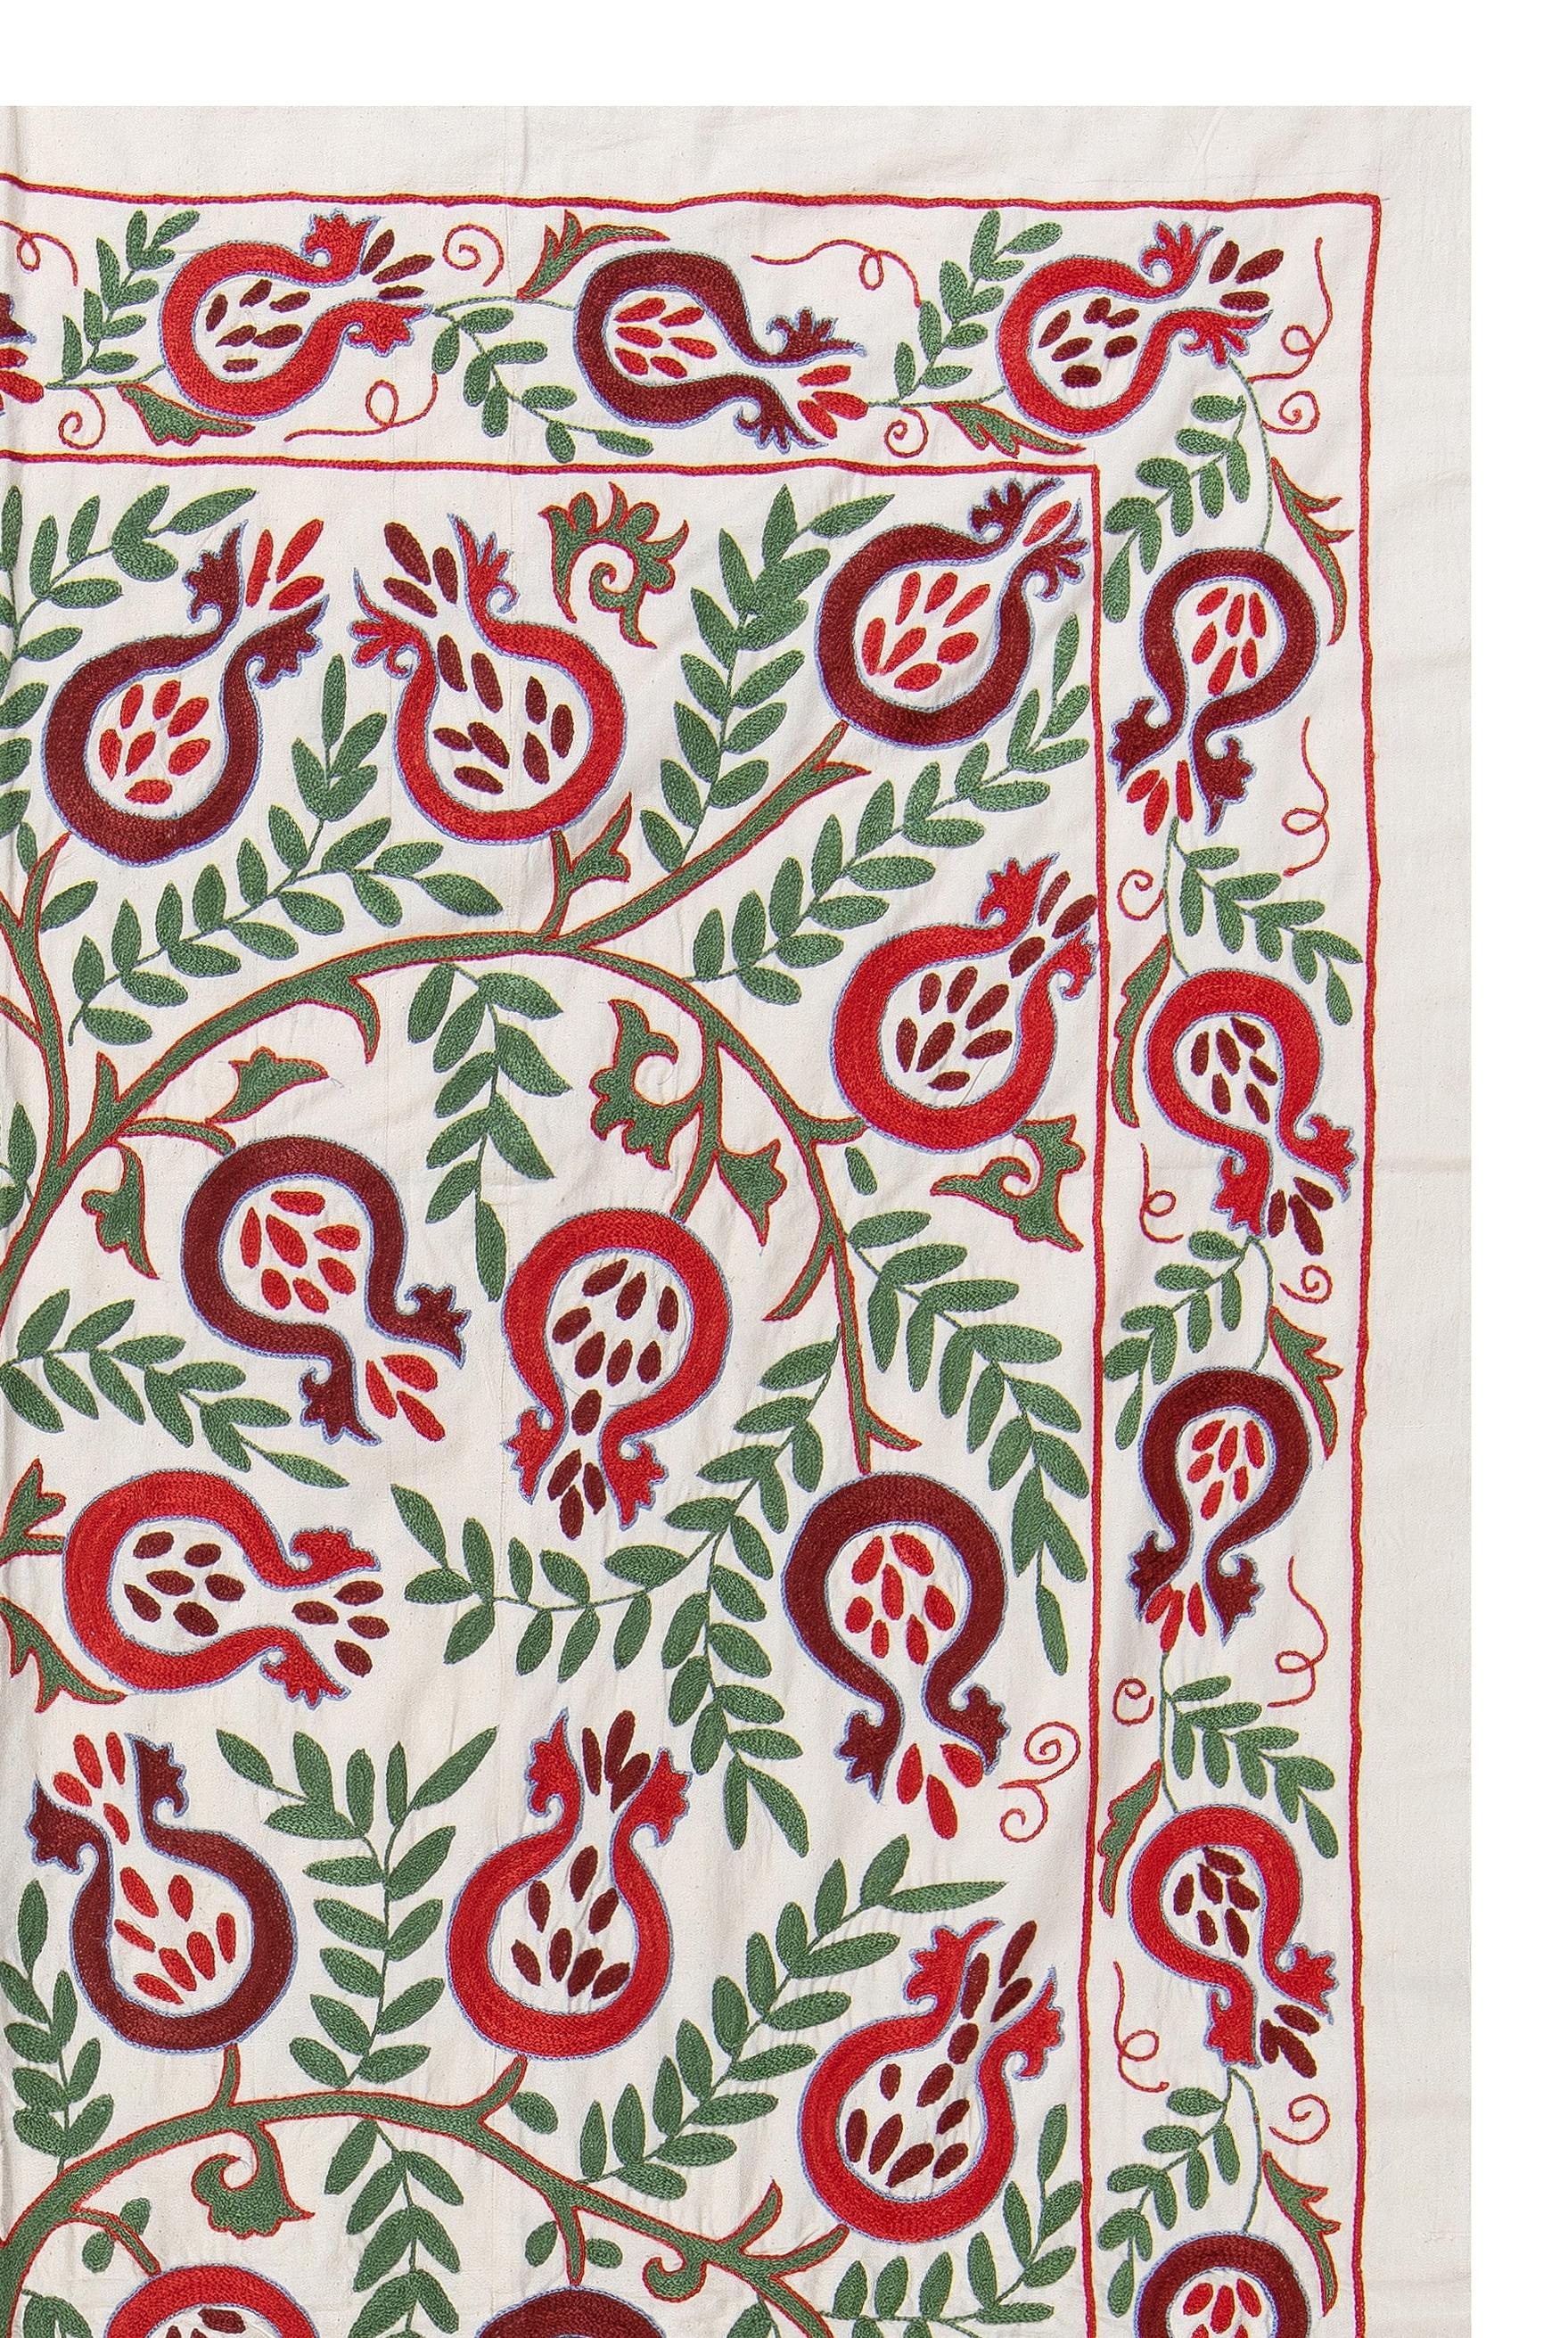 Uzbek 4.7x7 Ft Silk Suzani Pomegranate Tree Design Wall Hanging, Embroidered Bedspread